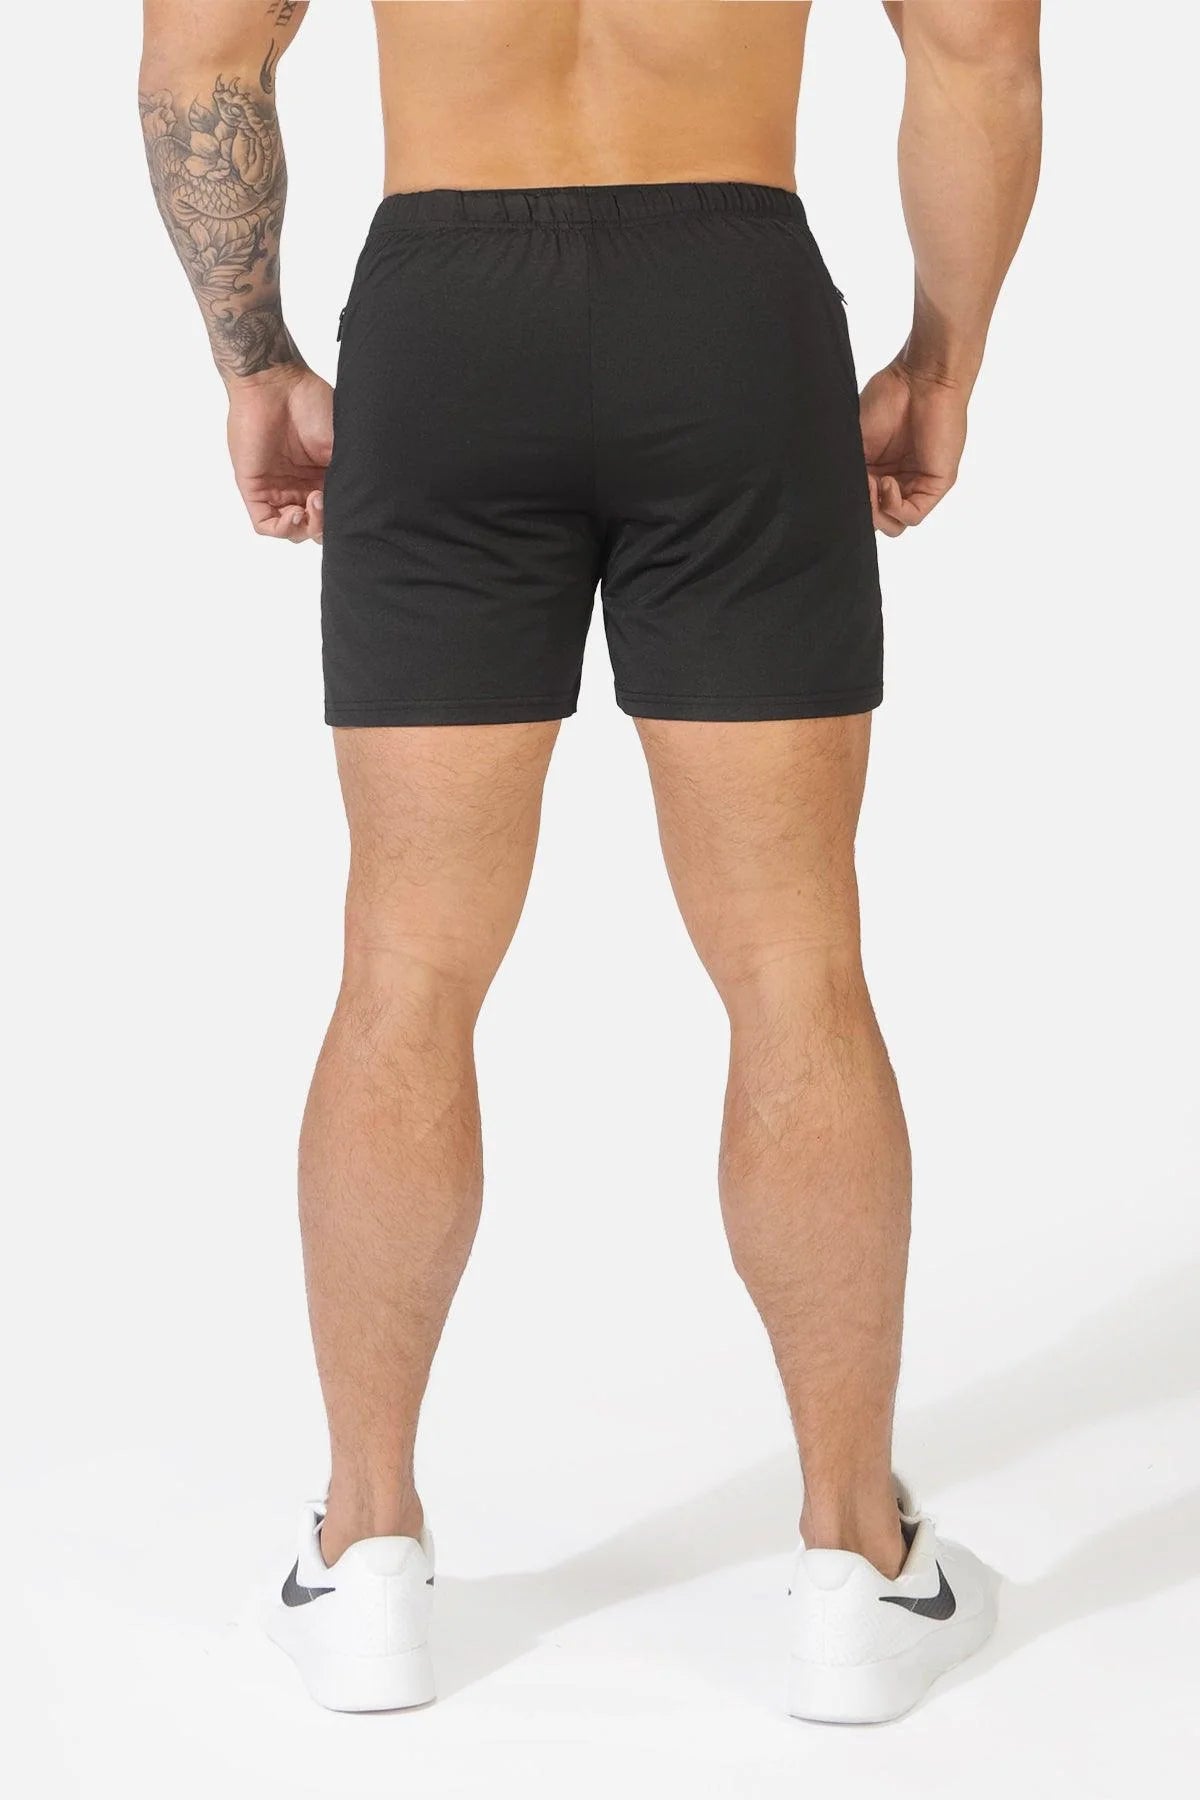 Jed North Agile 4" gym short w/zipper pockets black